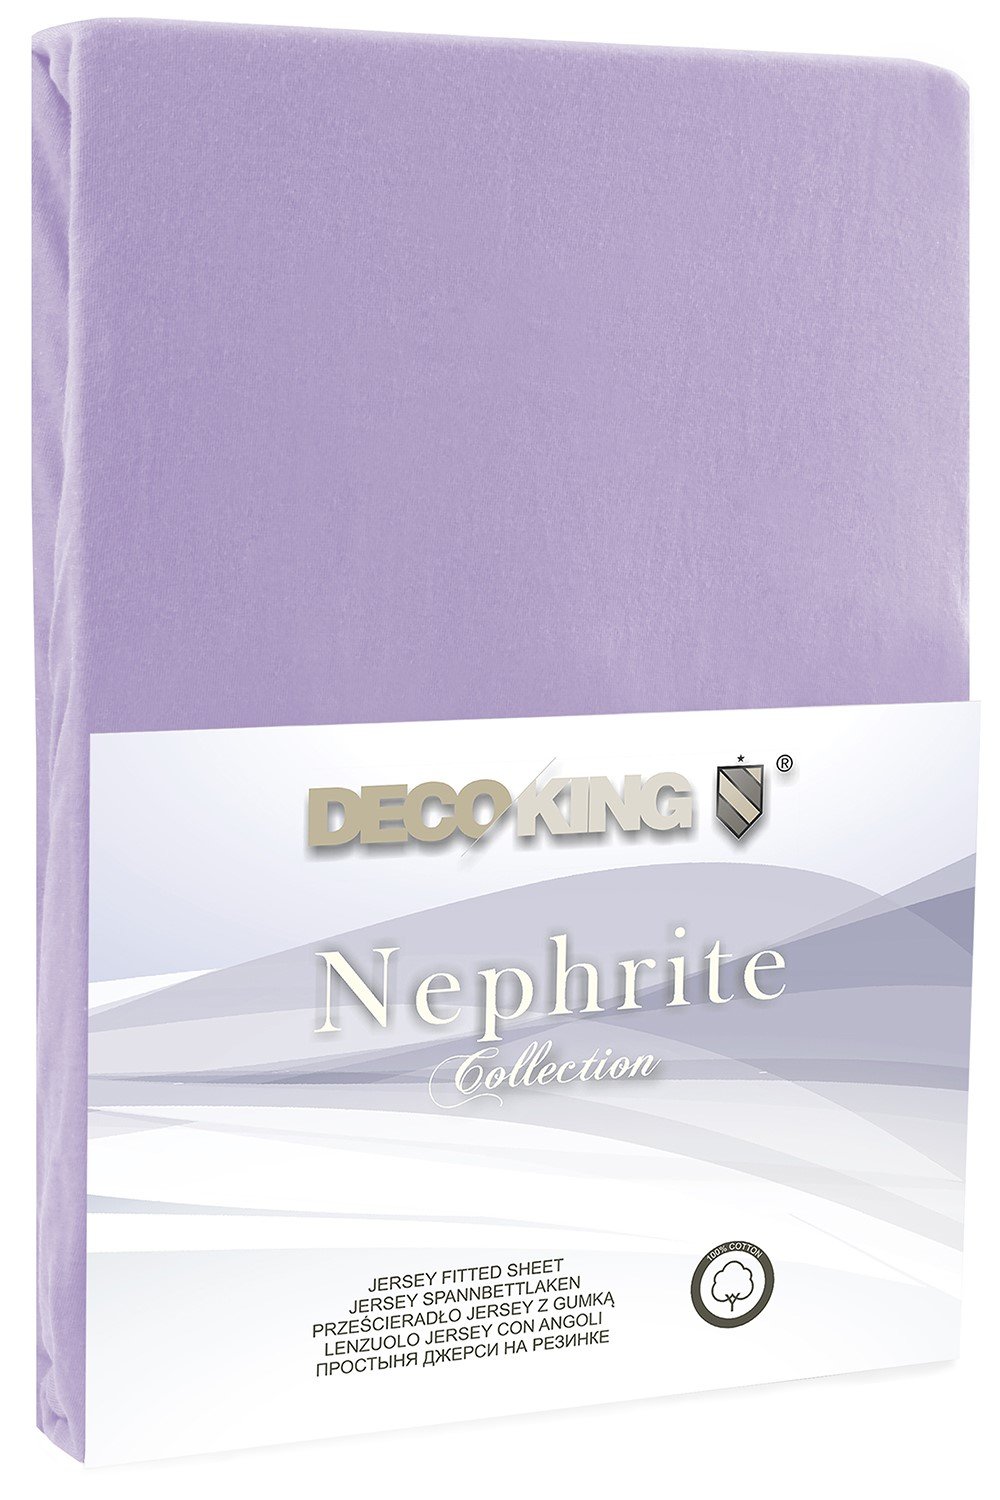 Jersey paklodė su guma Decoking NEPHRITE Light violet, 180x200 cm